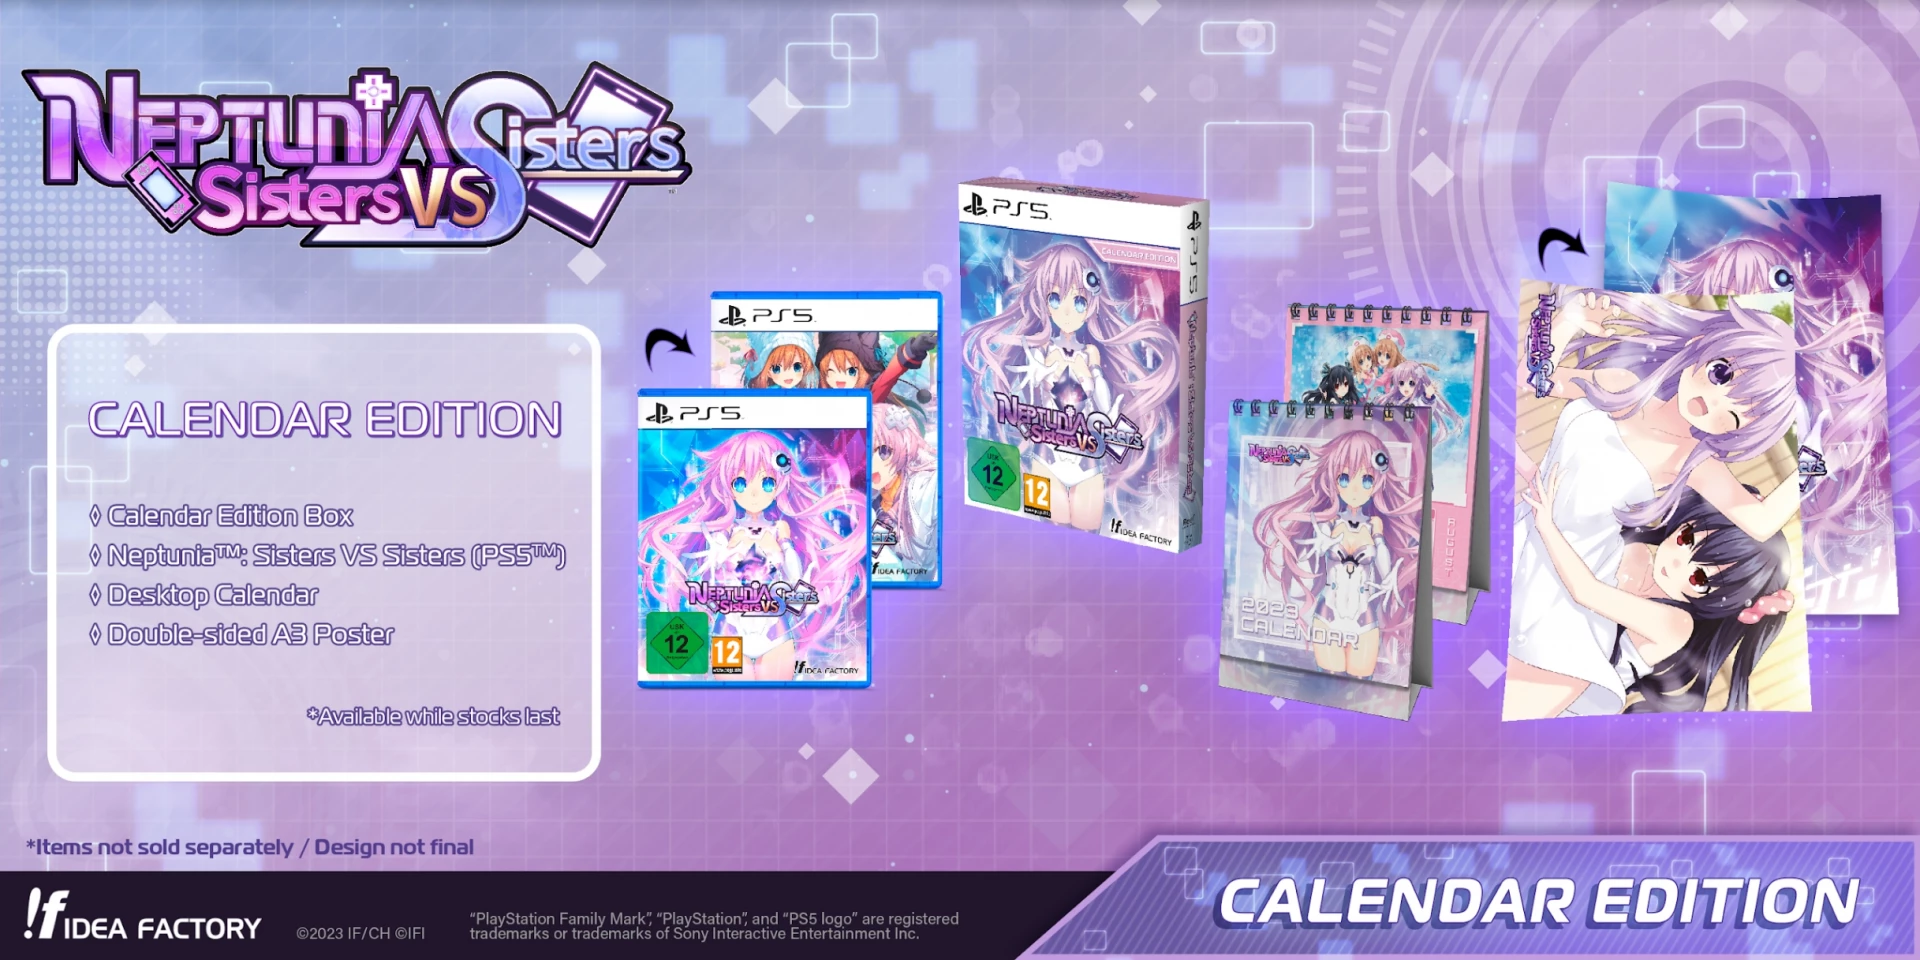 Neptunia: Sisters VS Sisters - Calendar Edition (PS5), Idea Factory